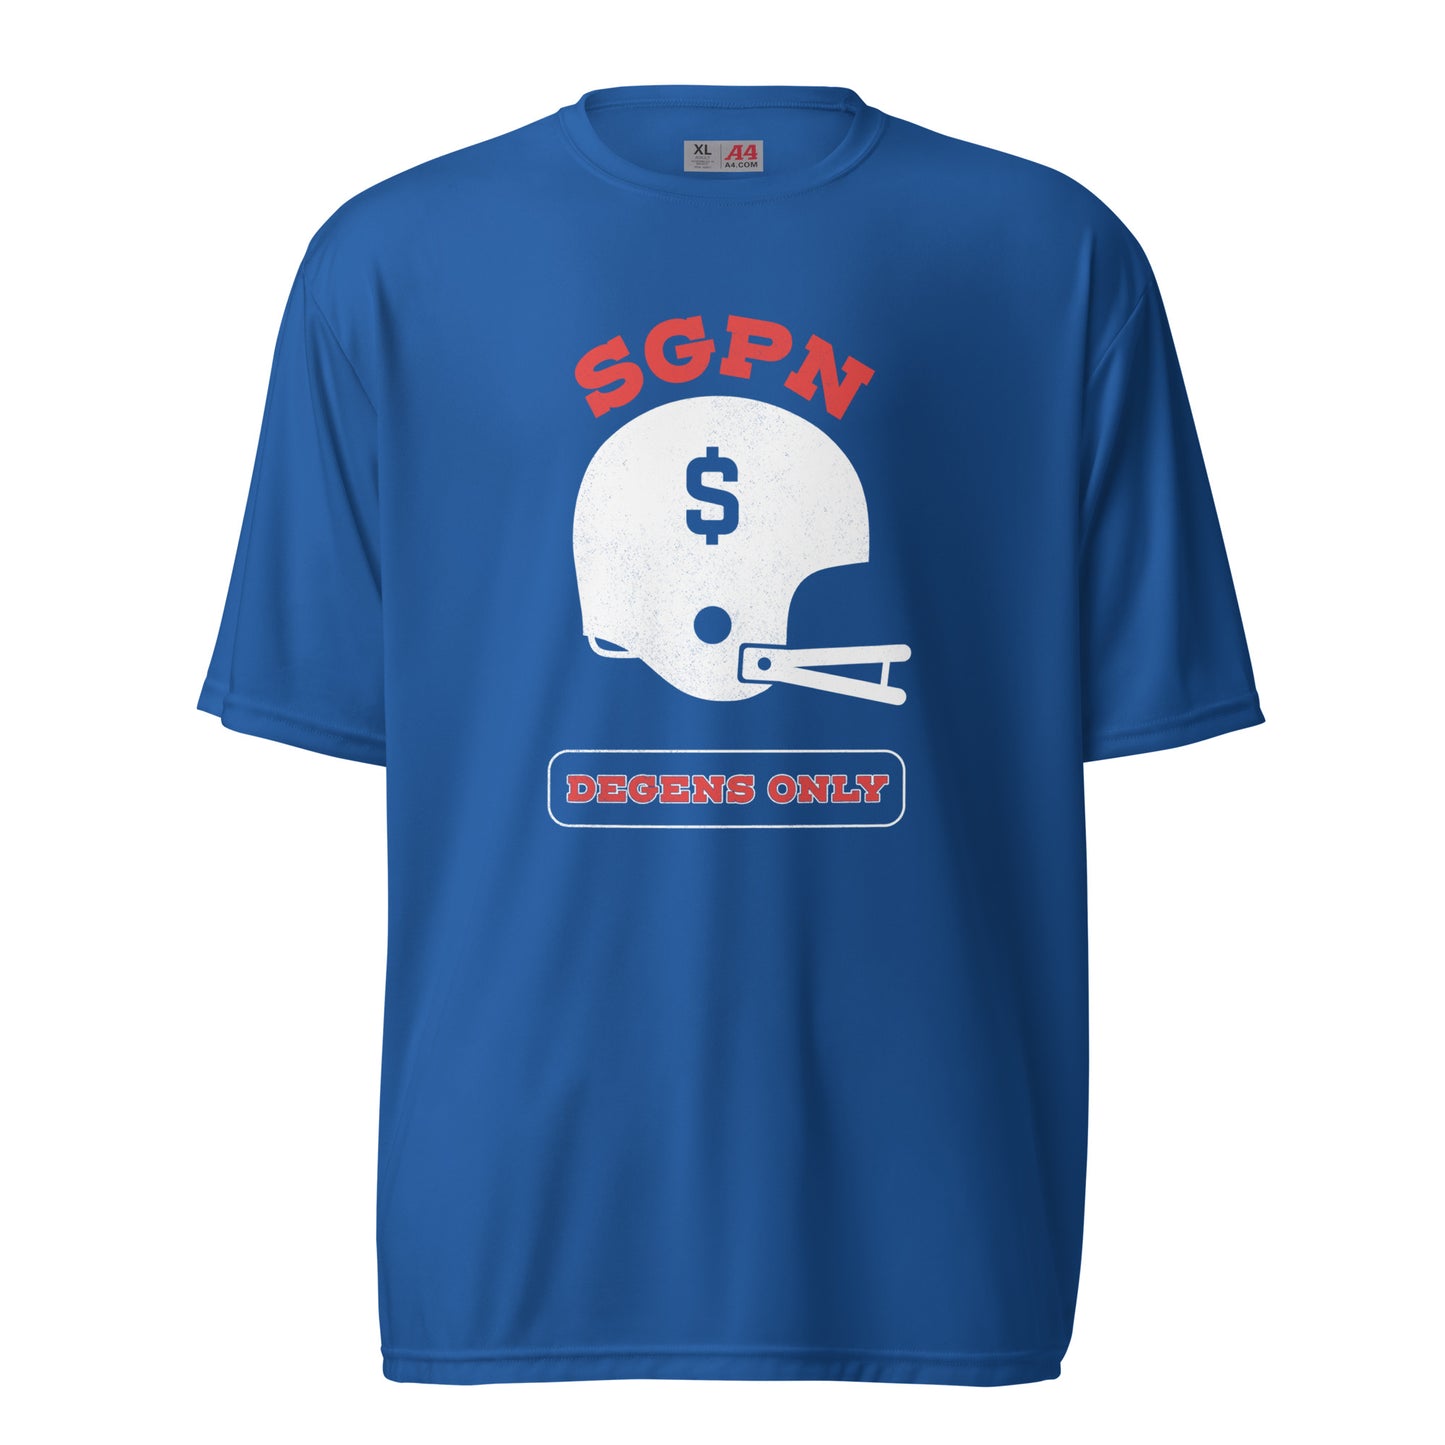 SGPN Old School Football - Buffalo edition - Unisex performance crew neck t-shirt